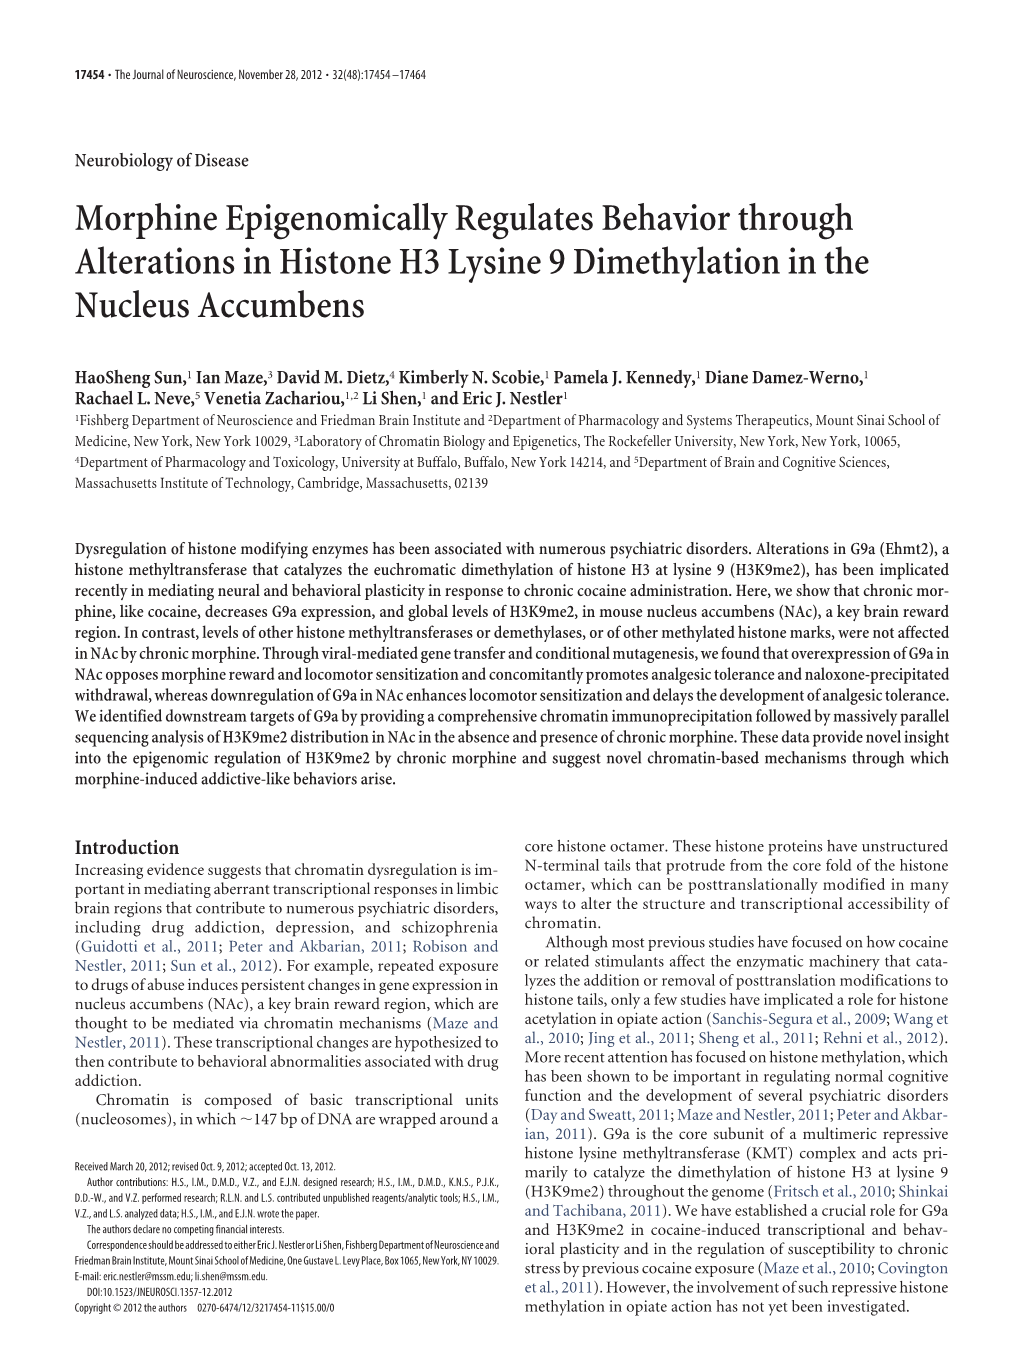 Morphine Epigenomically Regulates Behavior Through Alterations in Histone H3 Lysine 9 Dimethylation in the Nucleus Accumbens